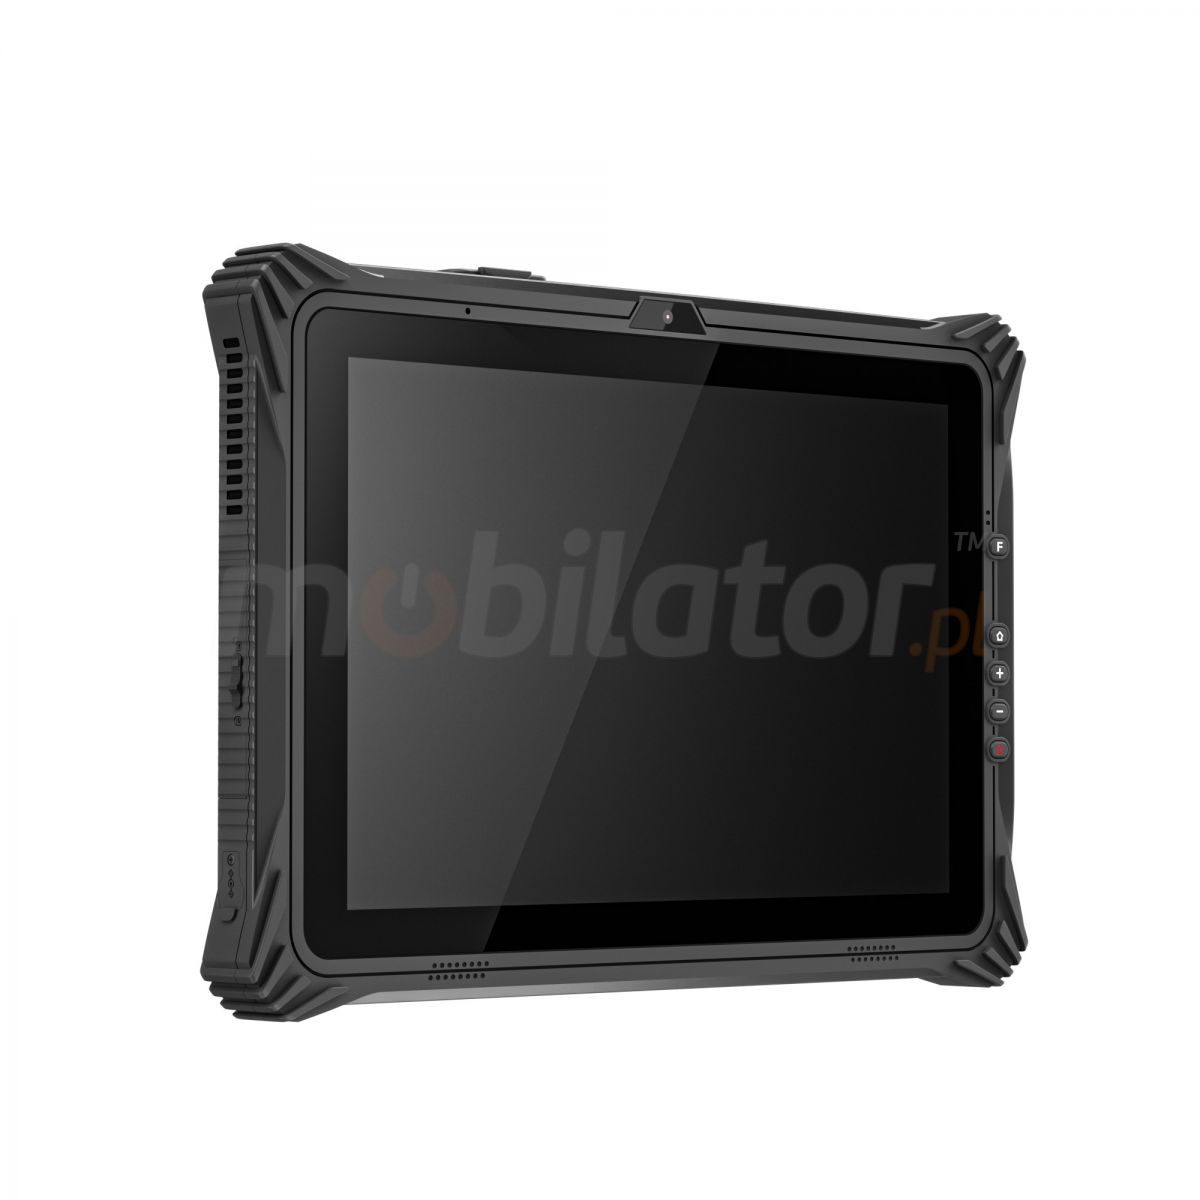 Industrial tablet with 2D code reader, Bluetooth 4.2, 8GB RAM, 128GB ROM, NFC, 4G and Windows 10 IoT - Emdoor I20U v.7